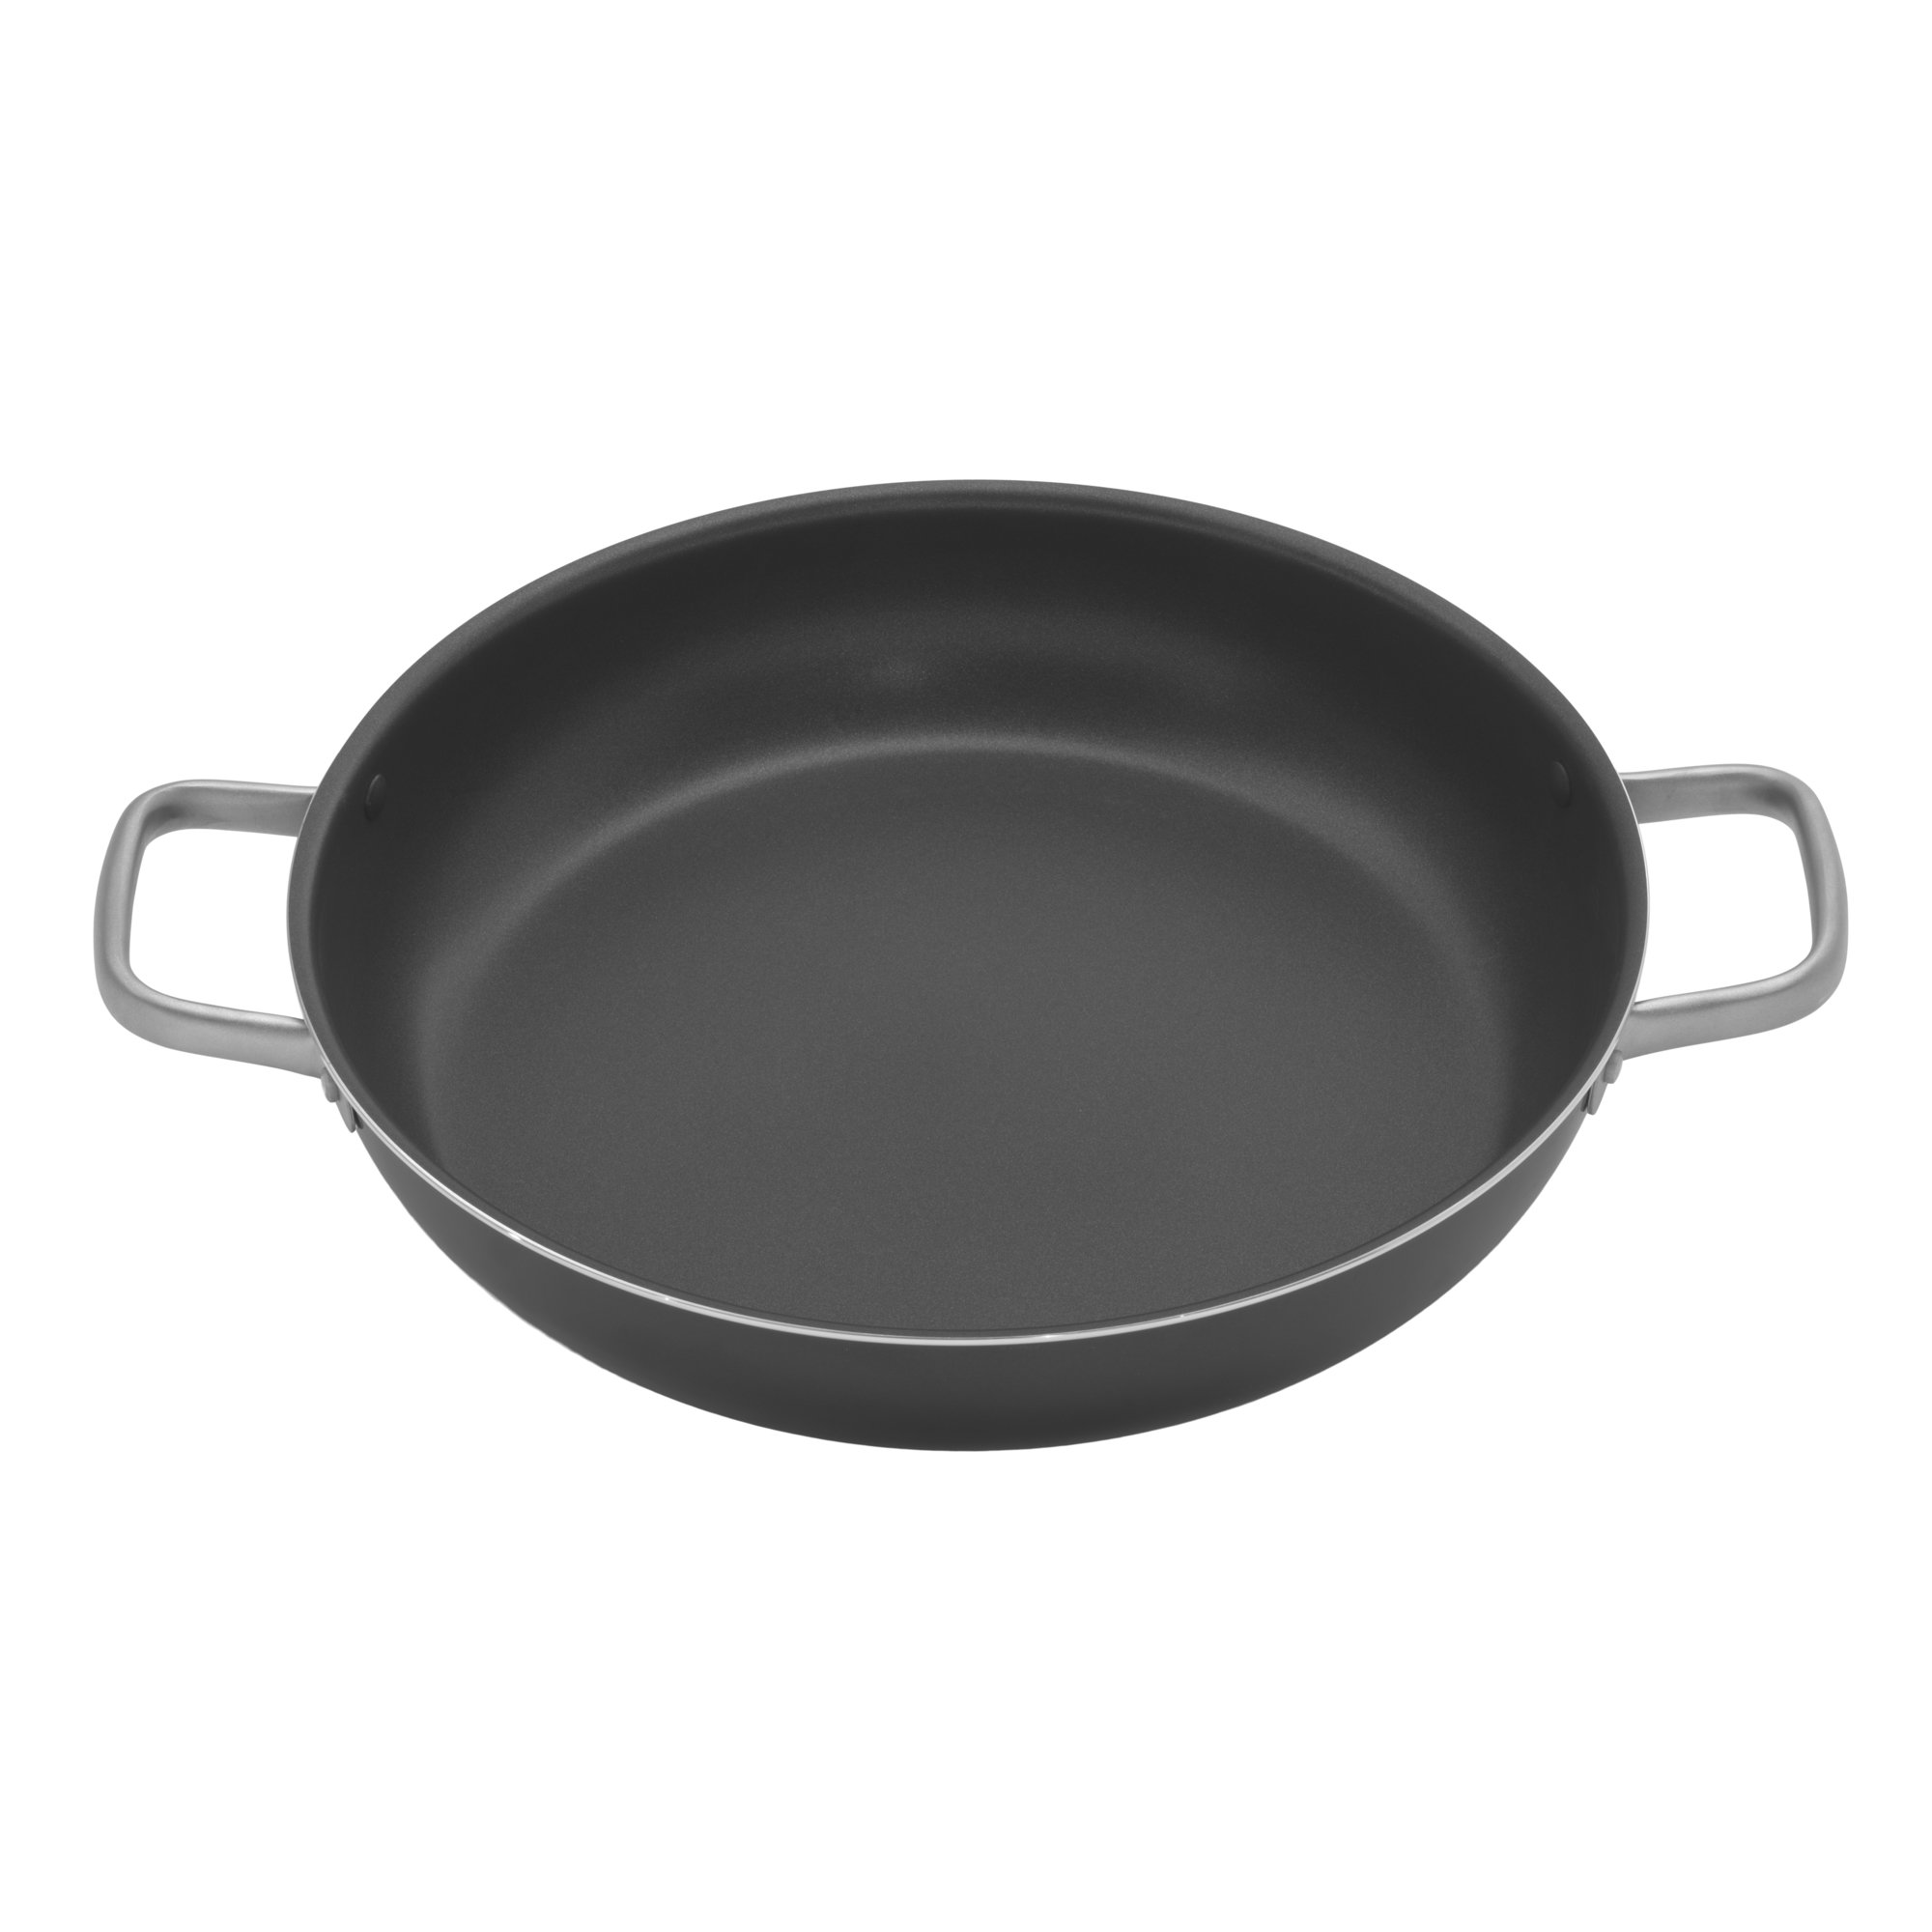  Bialetti Cookware Italian, 12, Non-Stick Saute Pan